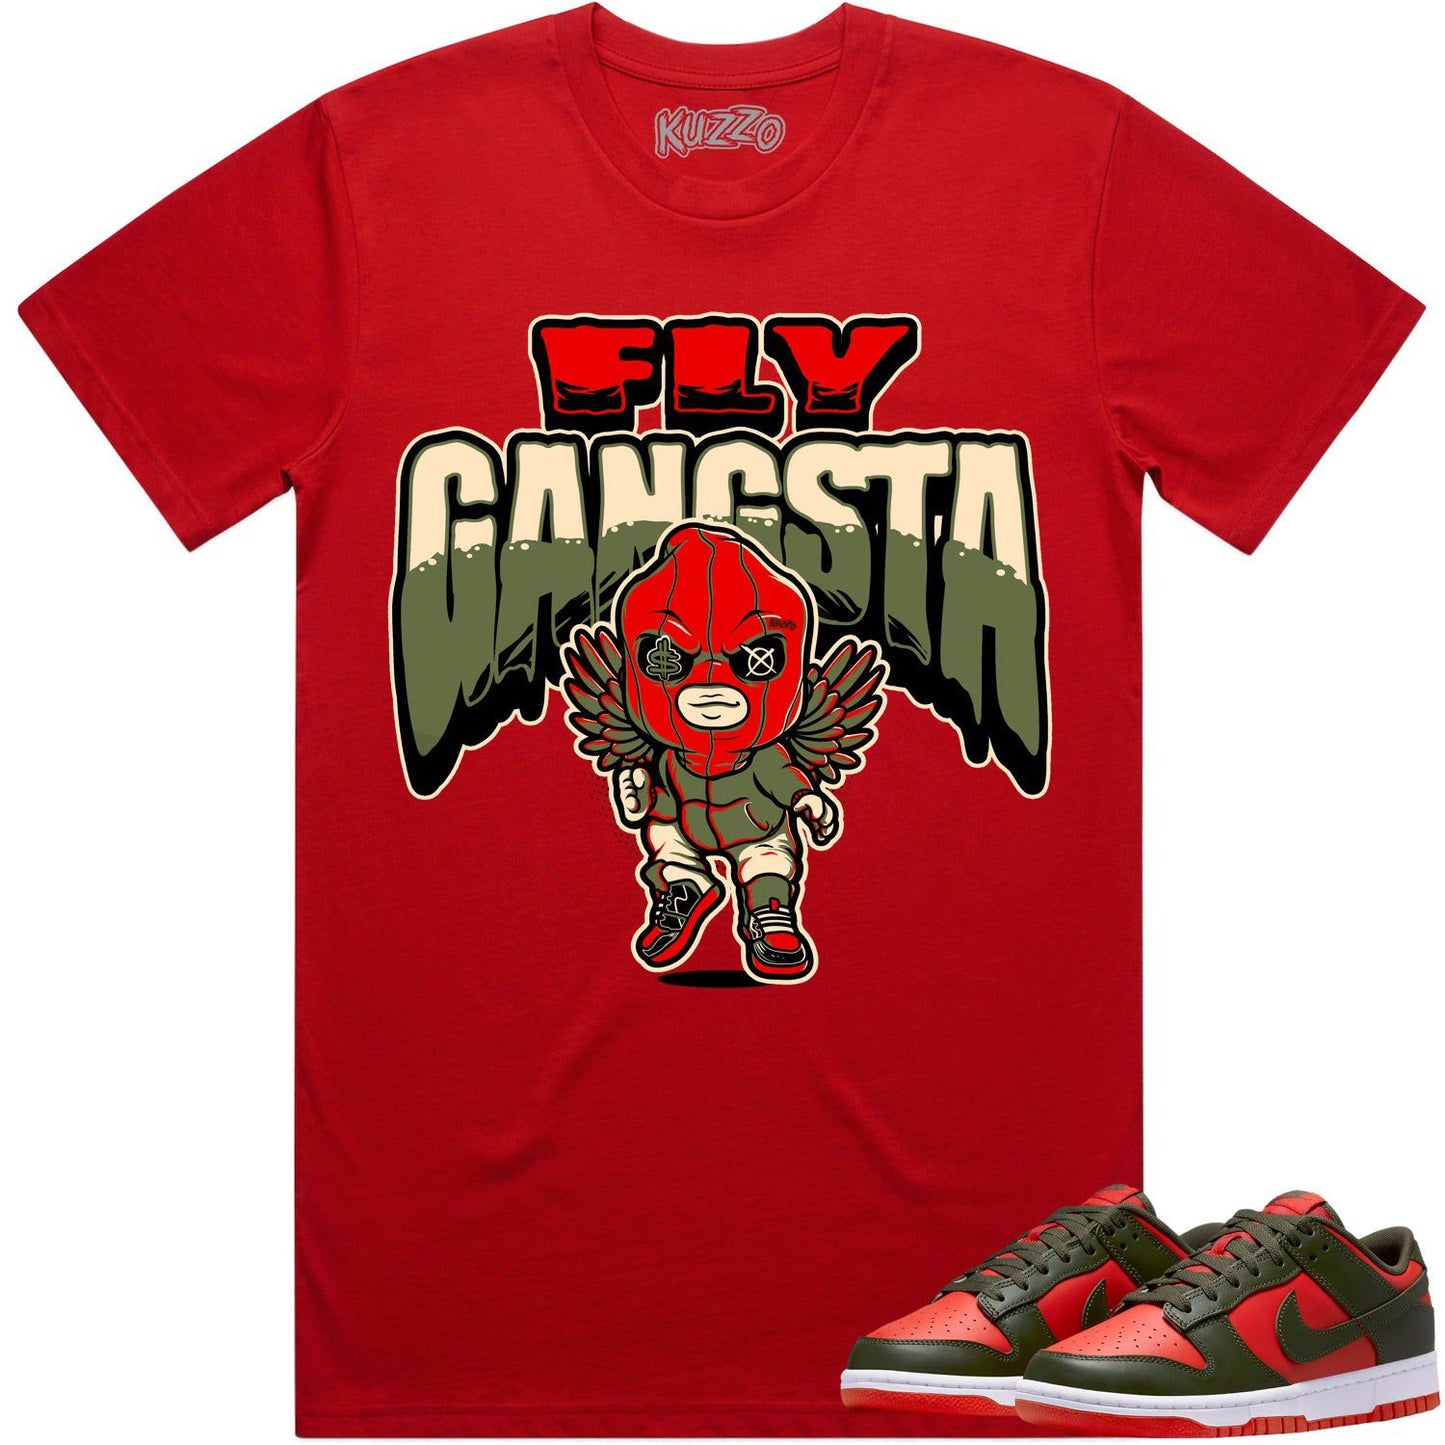 Mystic Red Dunks Shirt - Dunks SB Mystic Red Shirts - Fly Gangsta